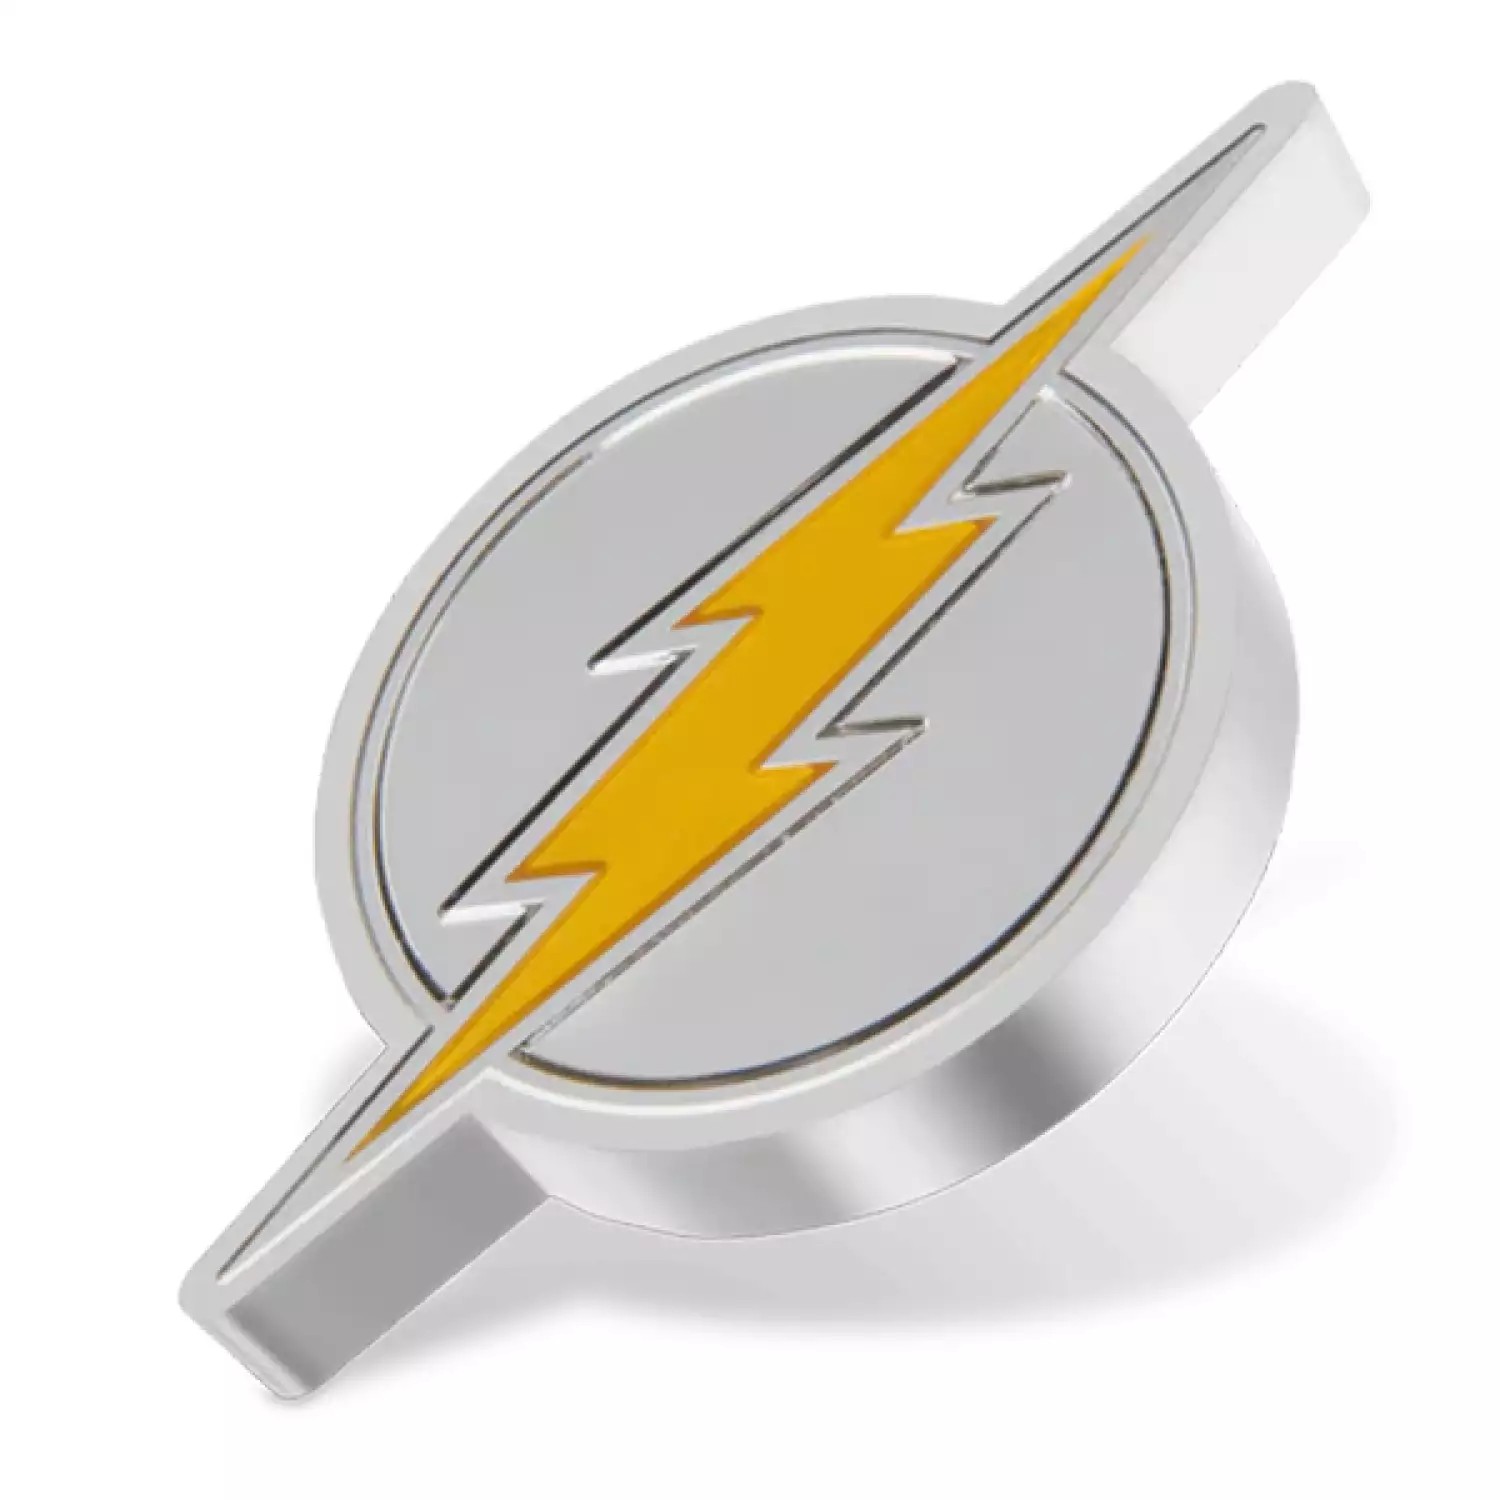 THE FLASH Emblem - 2021 1oz Silver Coin (3)